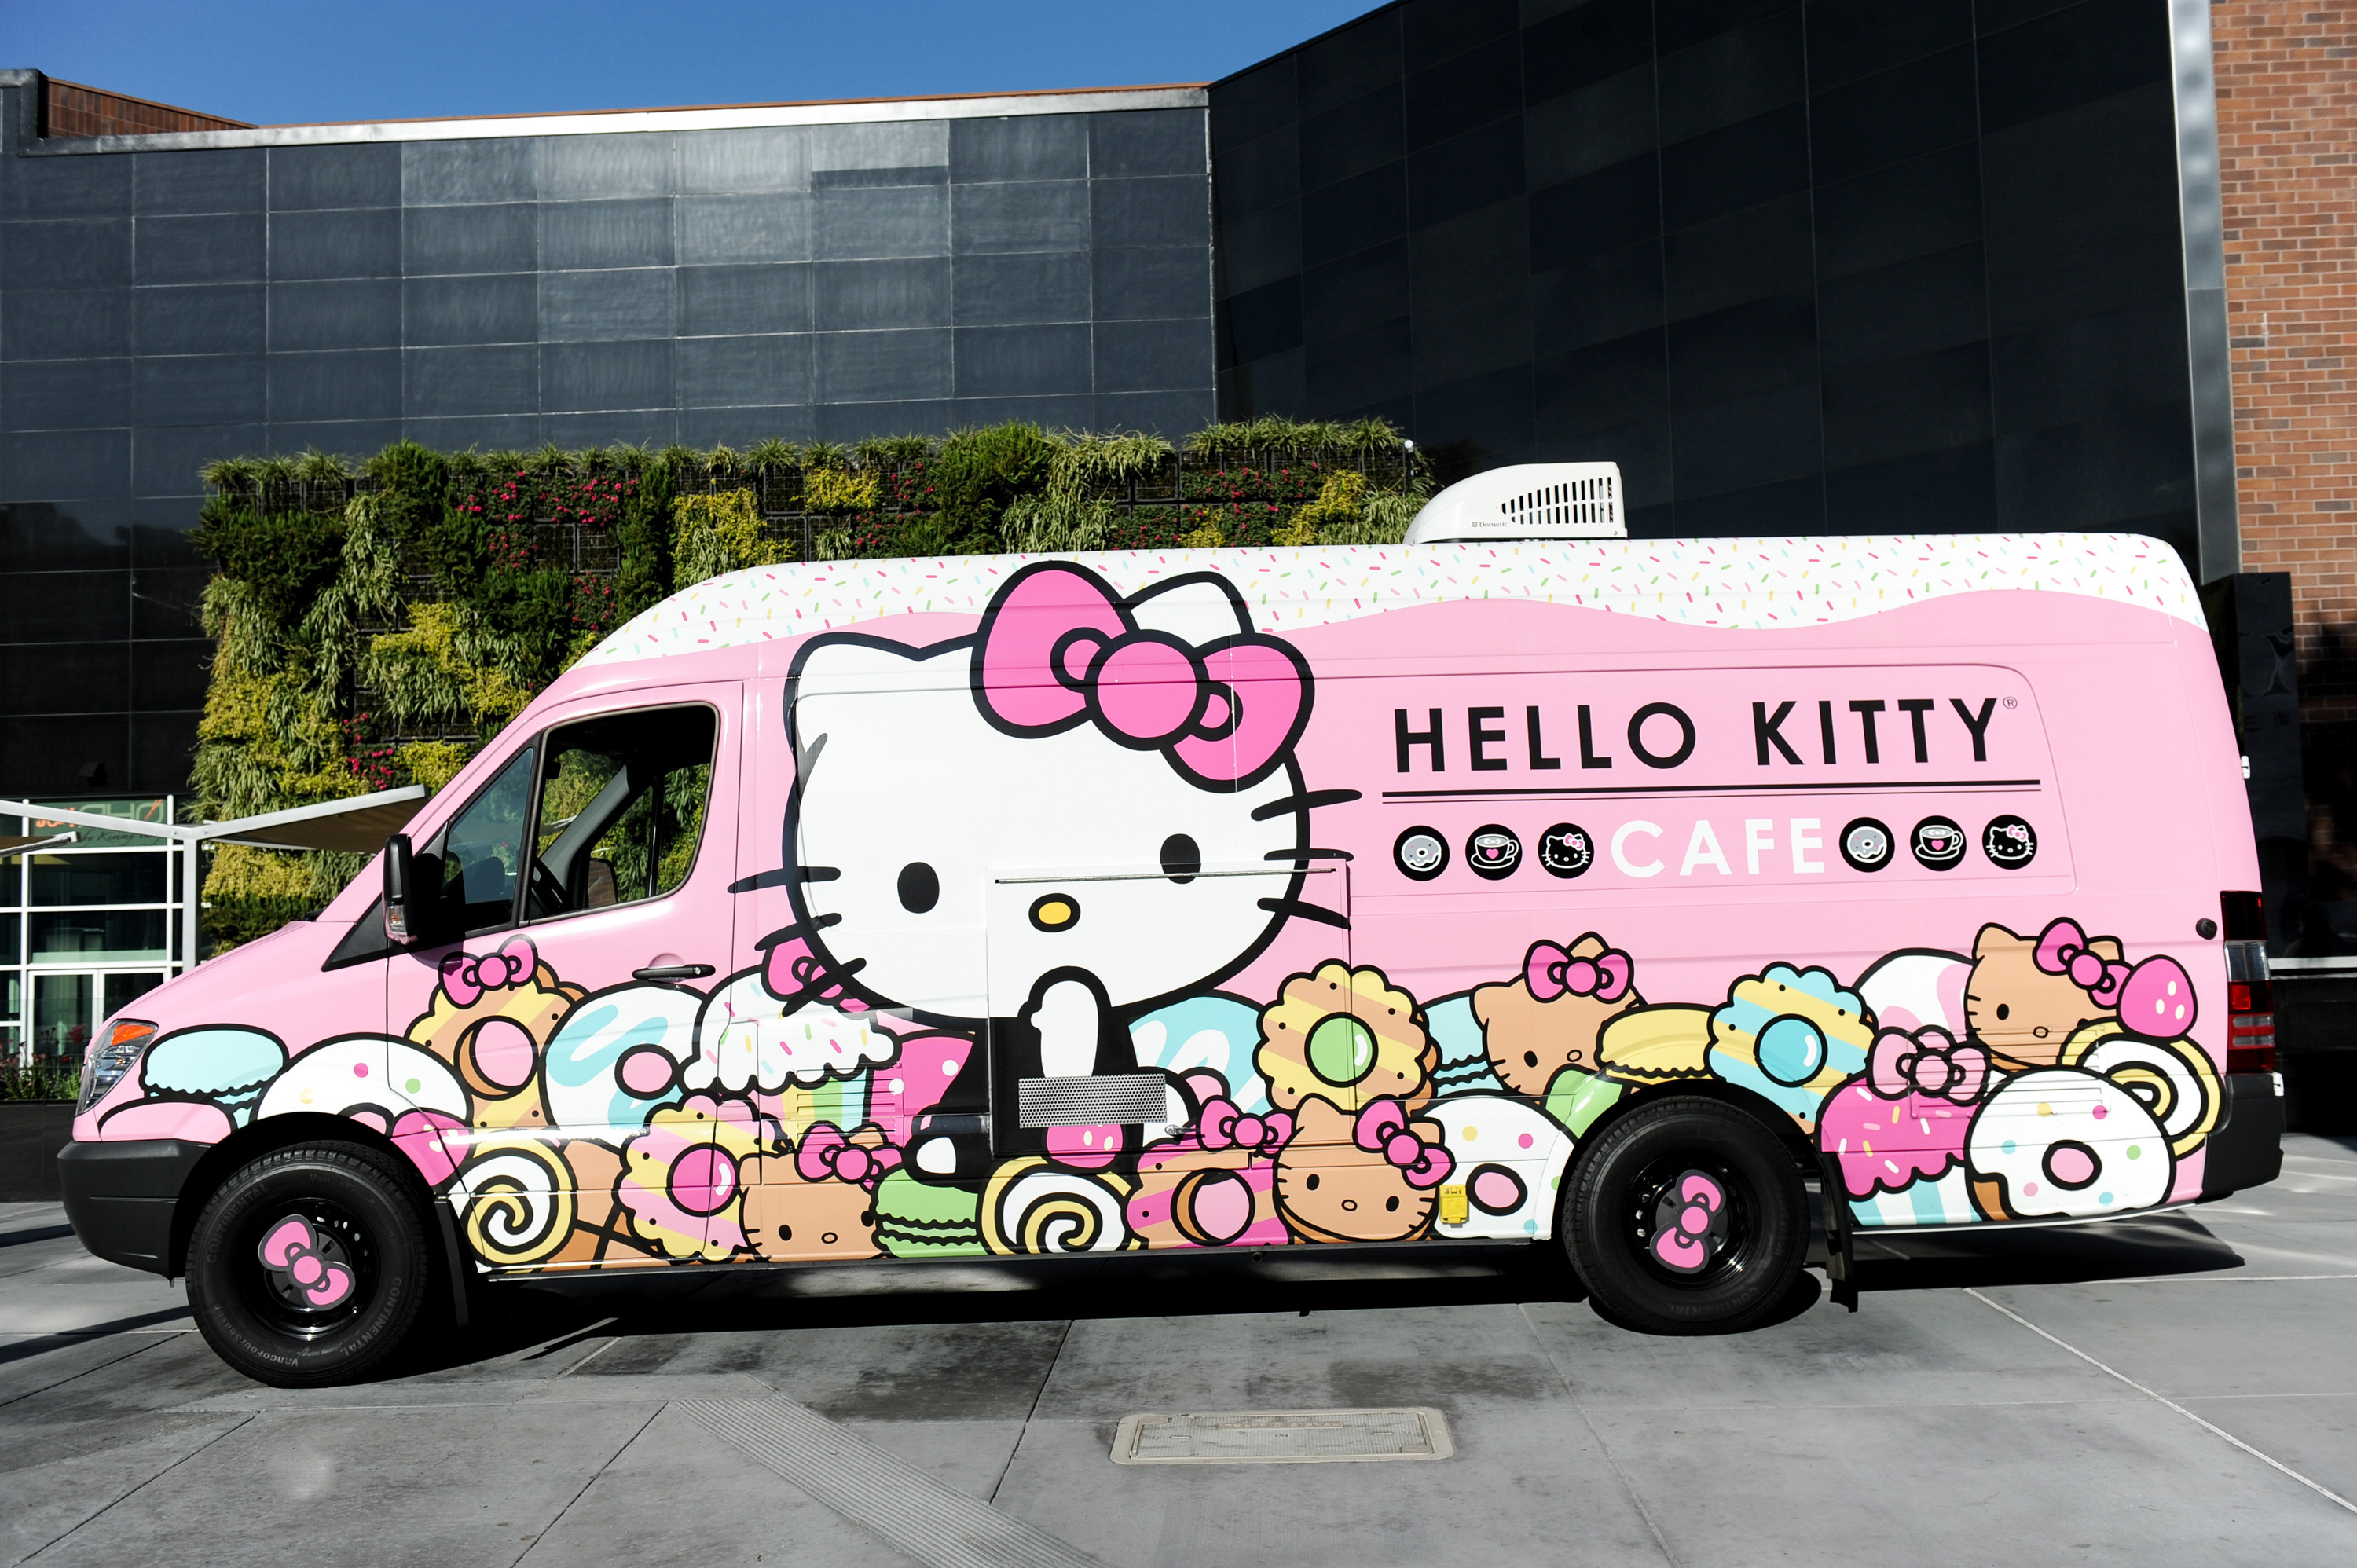 01 Hello Kitty Cafe Truck – exterior-1